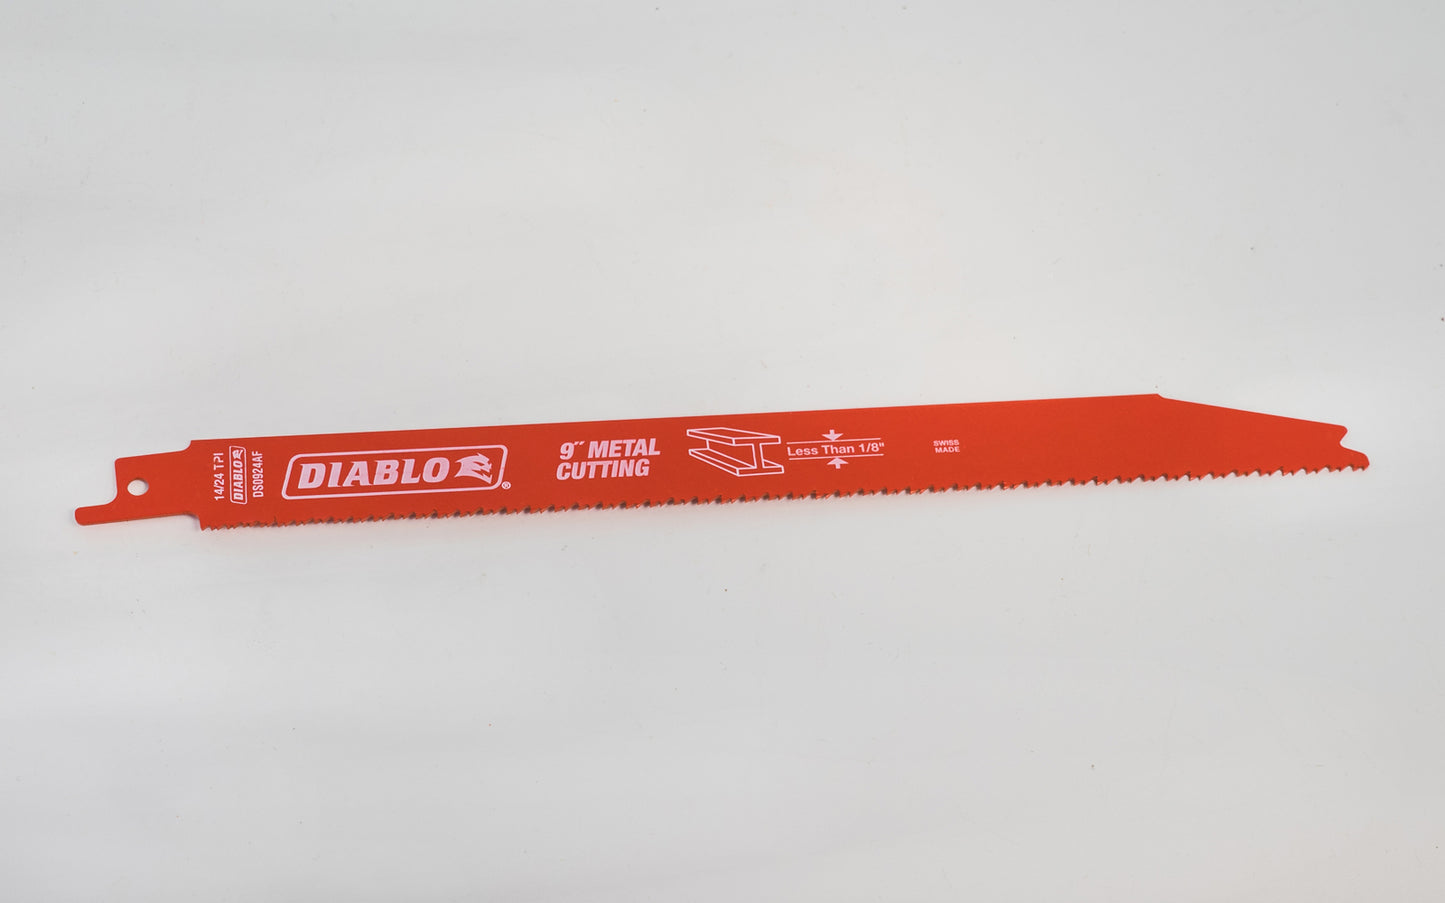 Diablo 9" Metal Cutting Reciprocating Saw Blade - 14 / 24 TPI. Model DS0924AF. Swiss made.